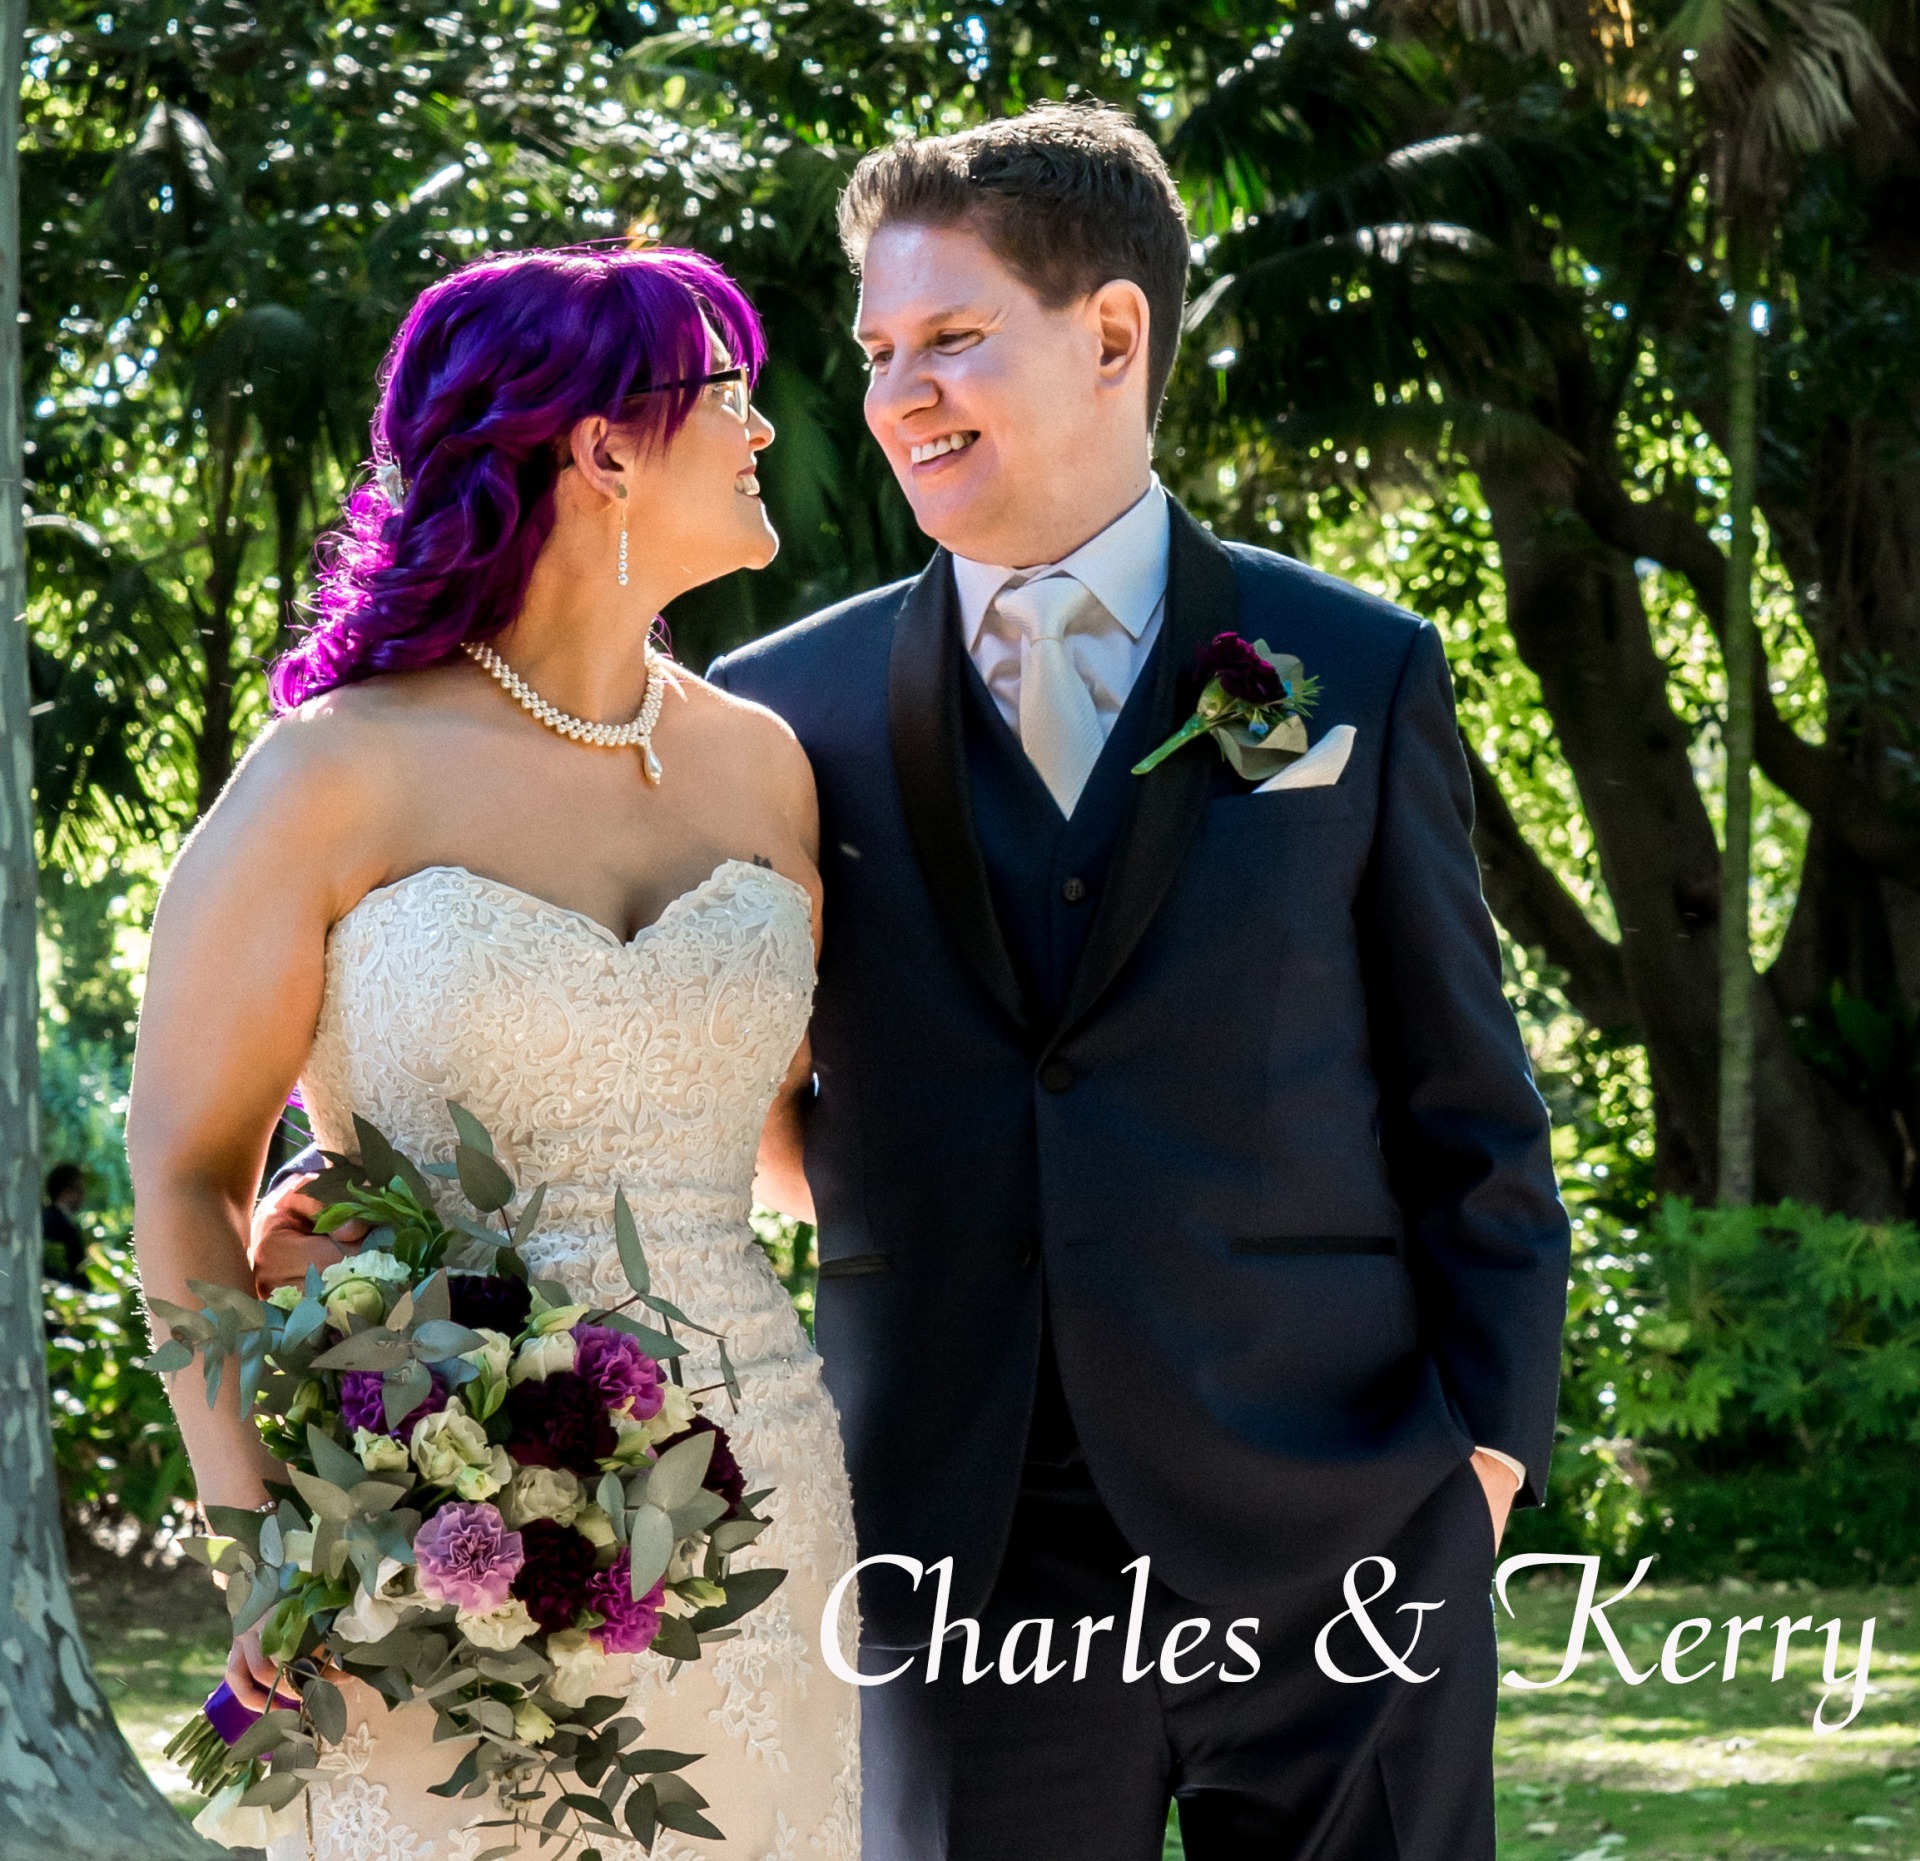 Charles & Kerry Wedding Highlights Video